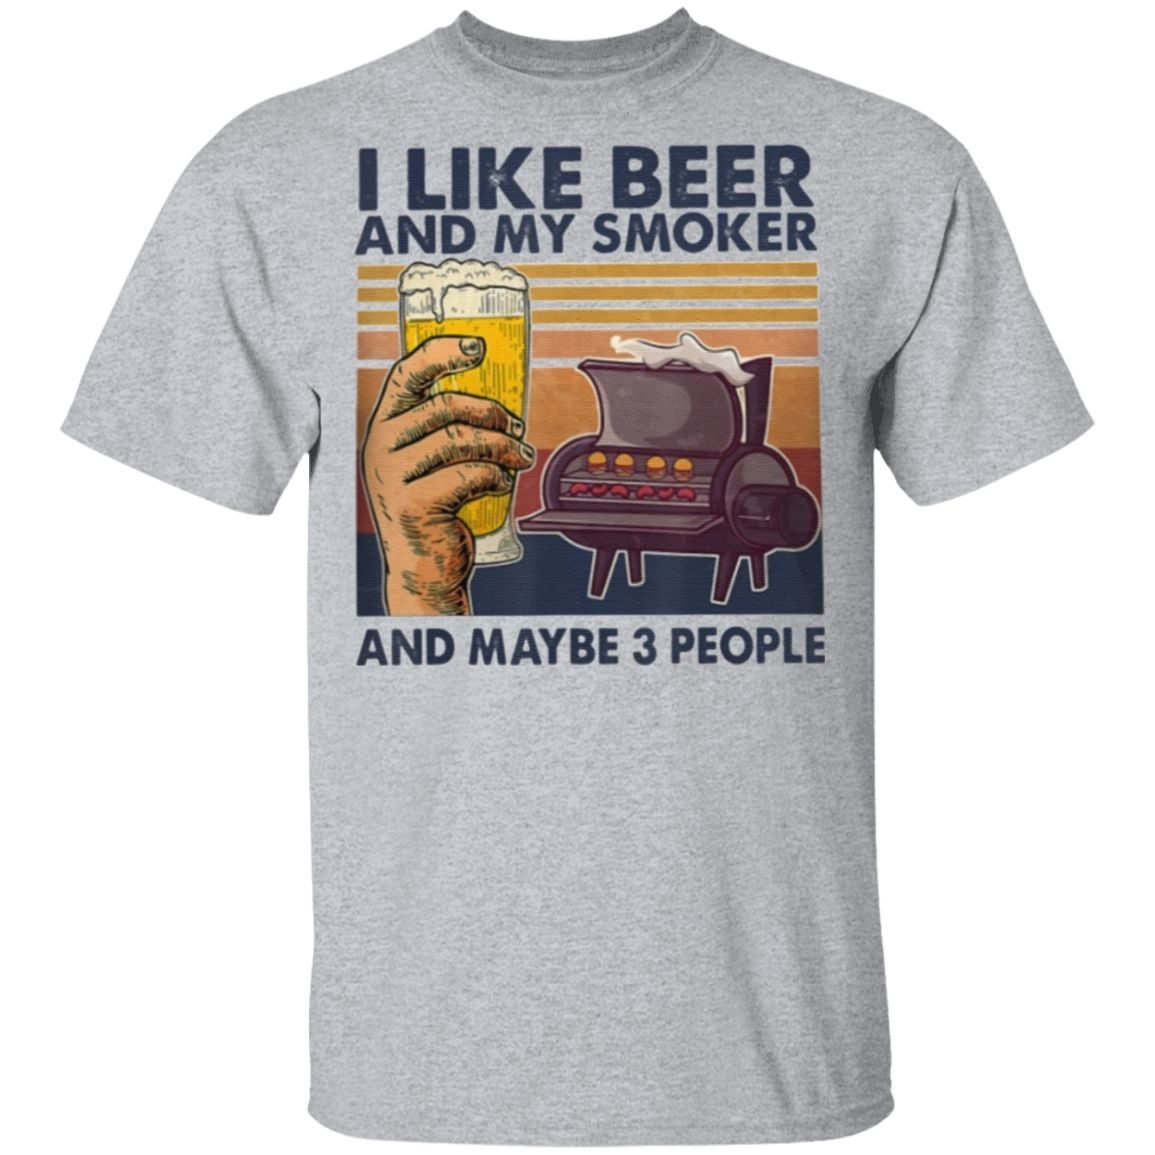 I like beer my smoker 3 people vintage shirt